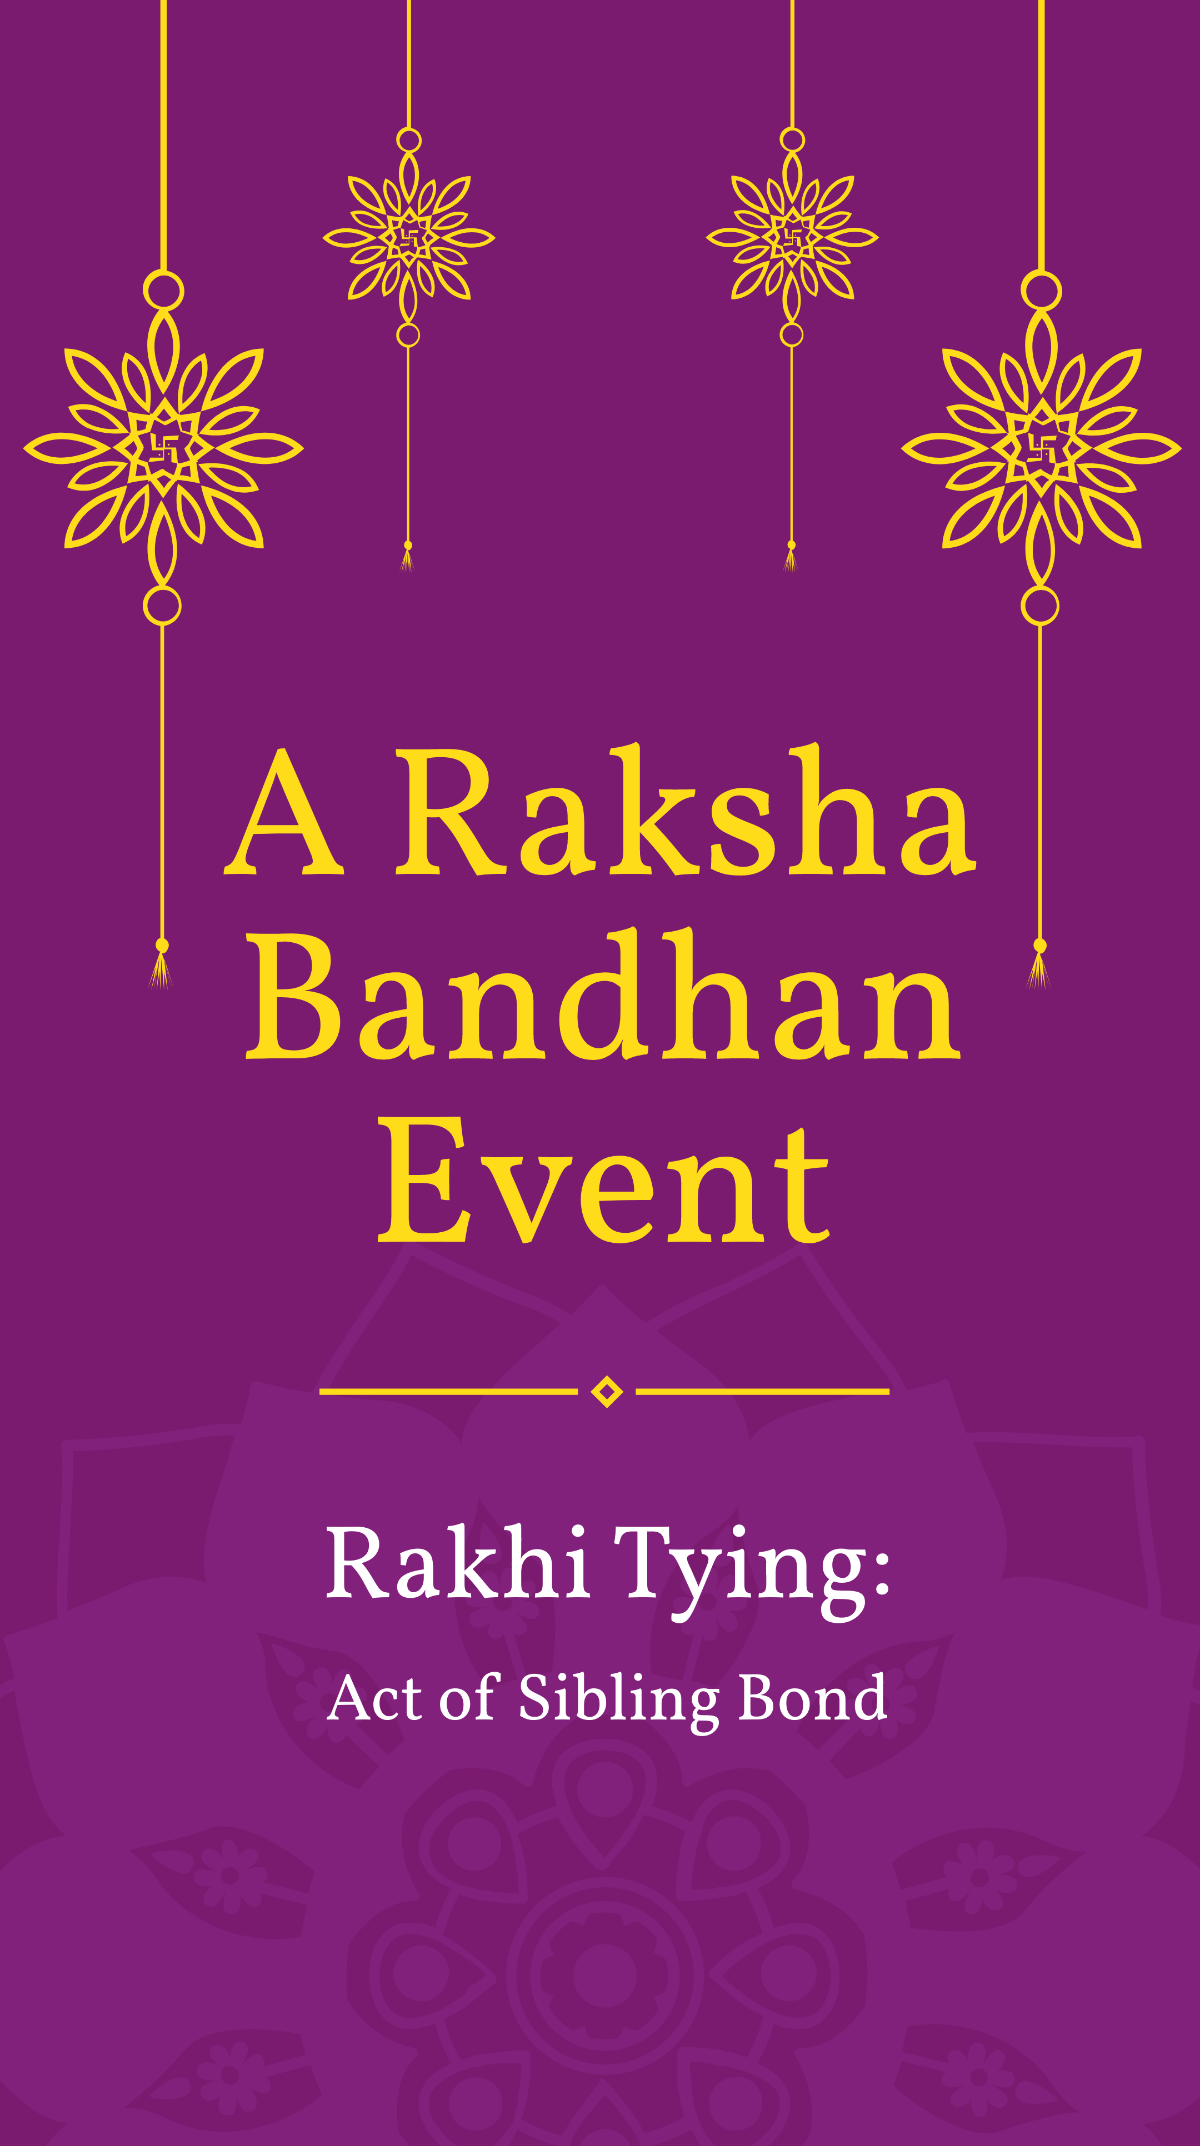 Raksha Bandhan Event Instagram Story Template